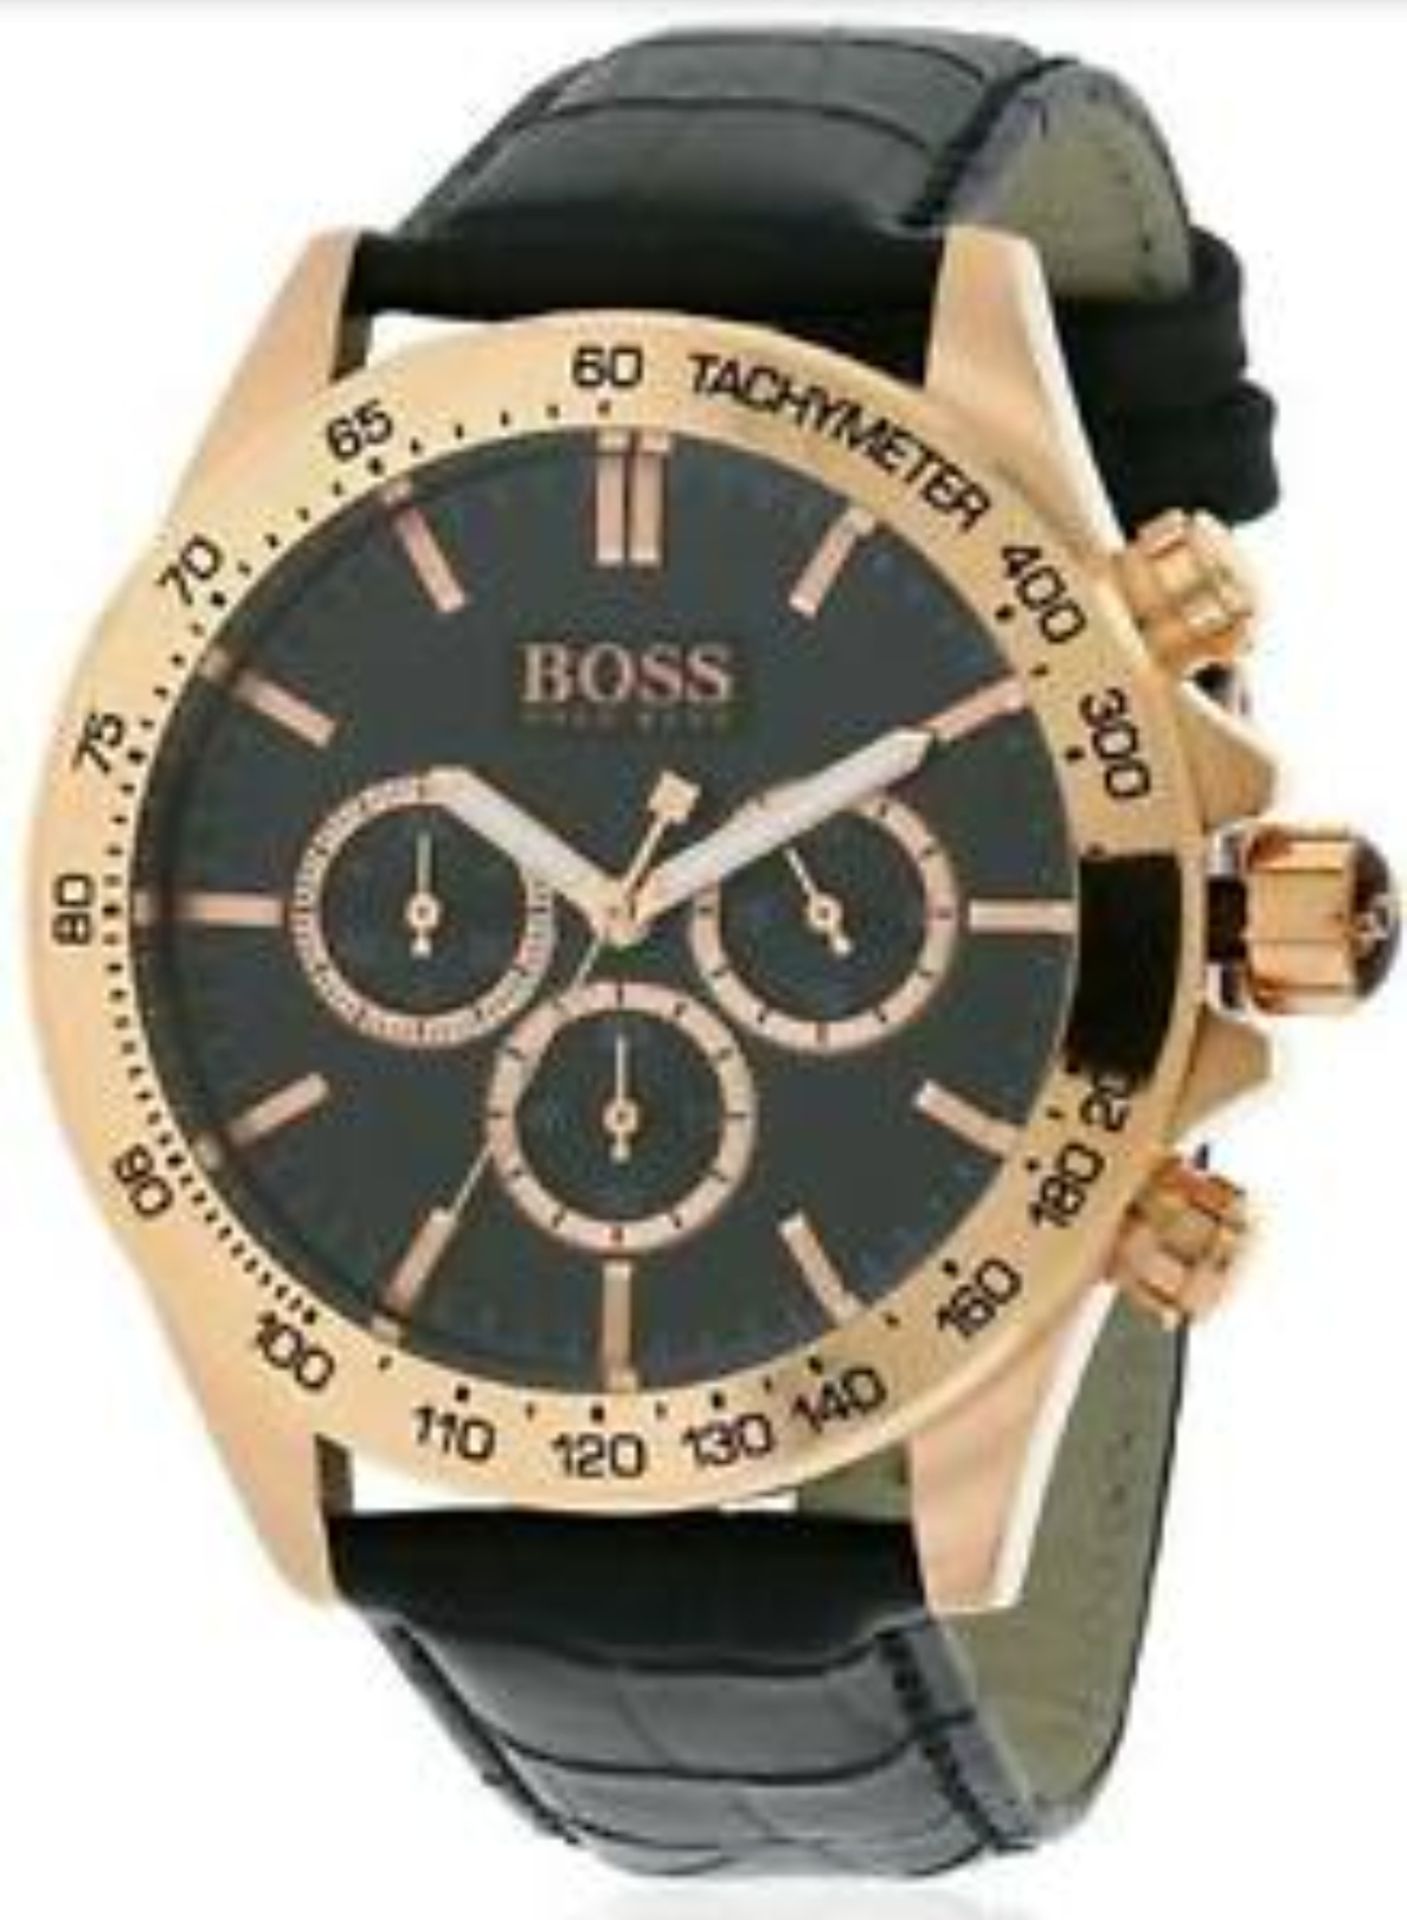 Hugo Boss 1513179 Men's Ikon Rose Gold Bezel Black Leather Strap Chronograph Watch - Image 4 of 8